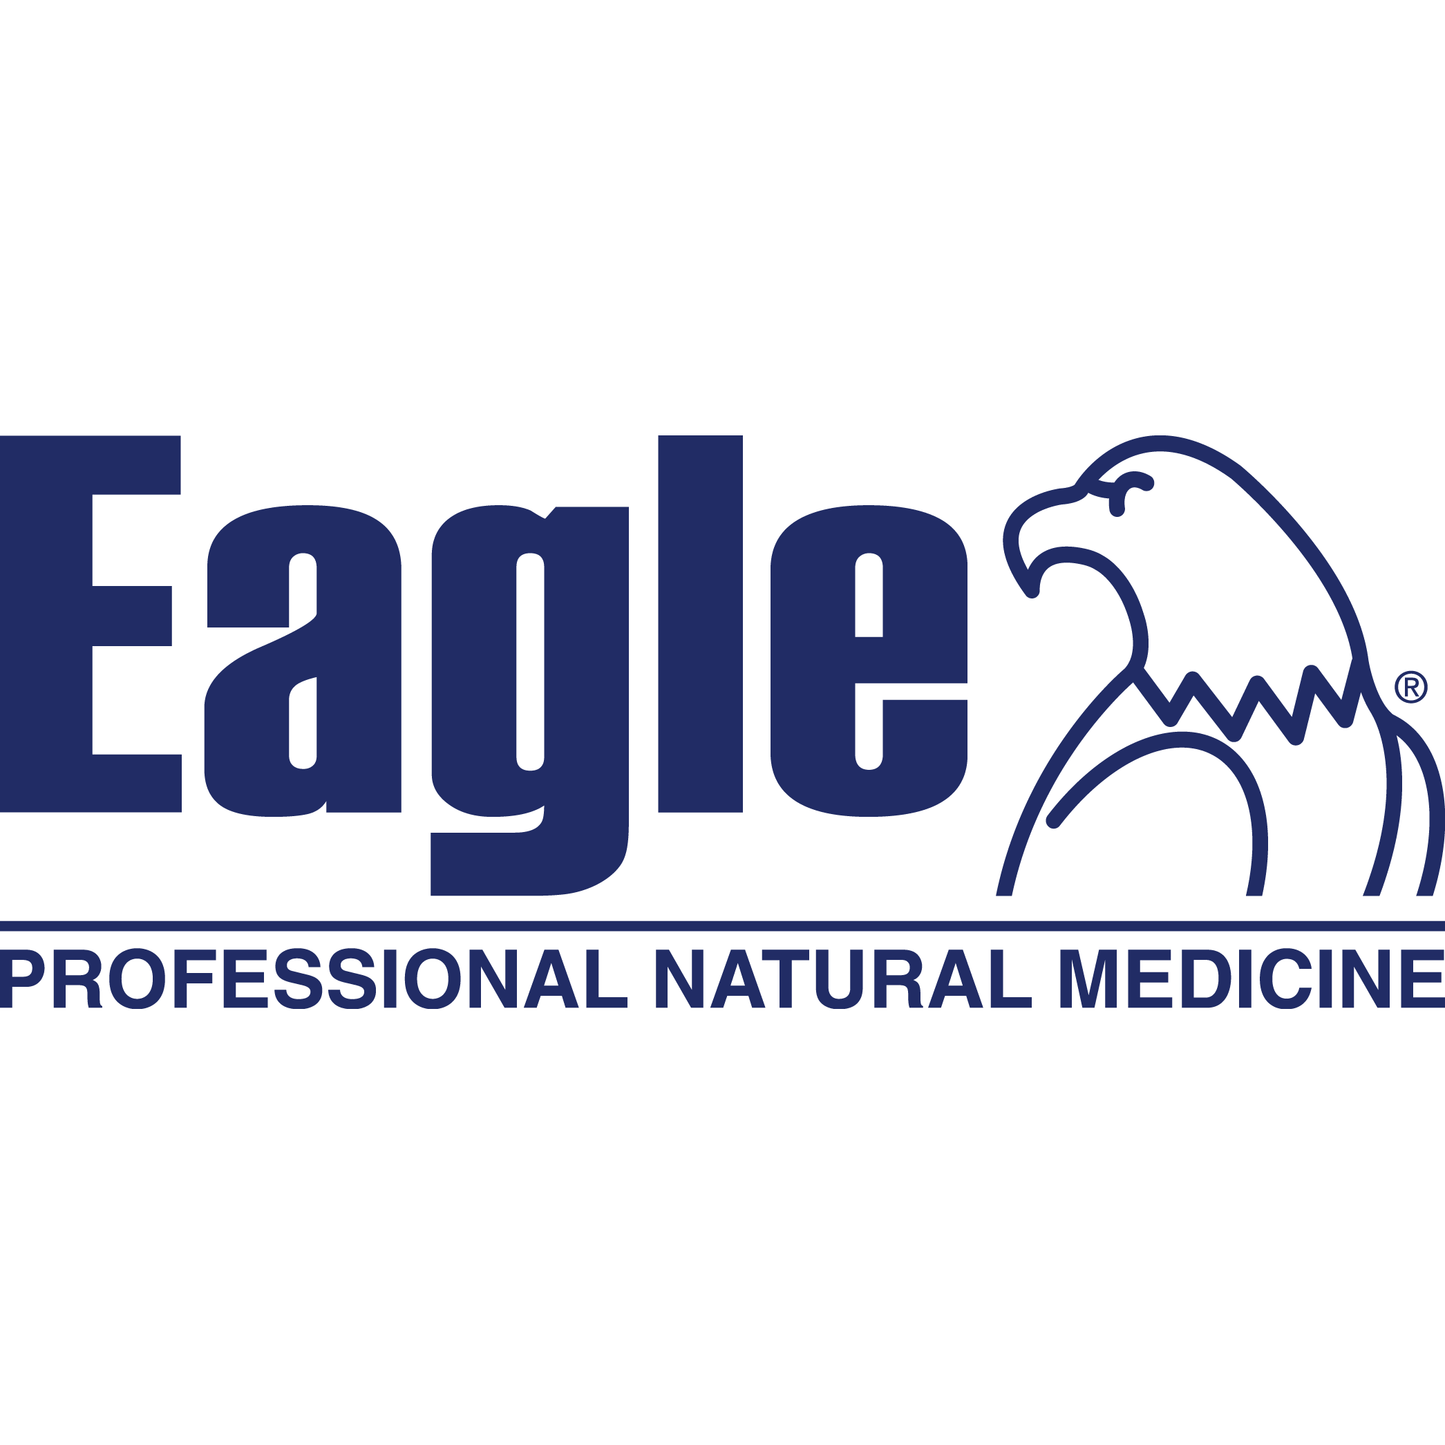 Eagle Potasi 60 Tablets